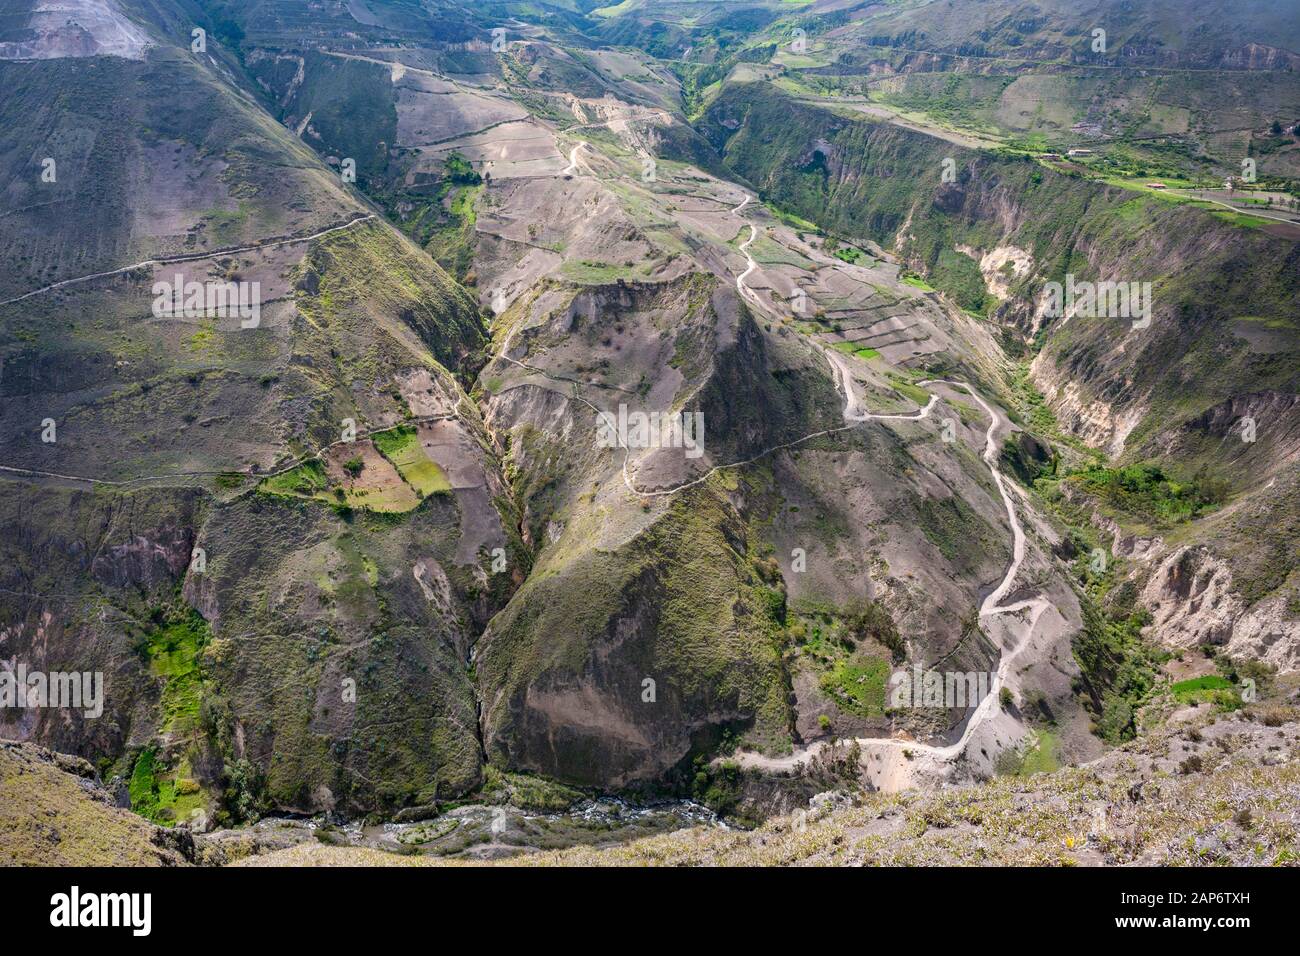 View of the landscape near the Devil’s Nose mountain near Alausi, Ecuador. Stock Photo